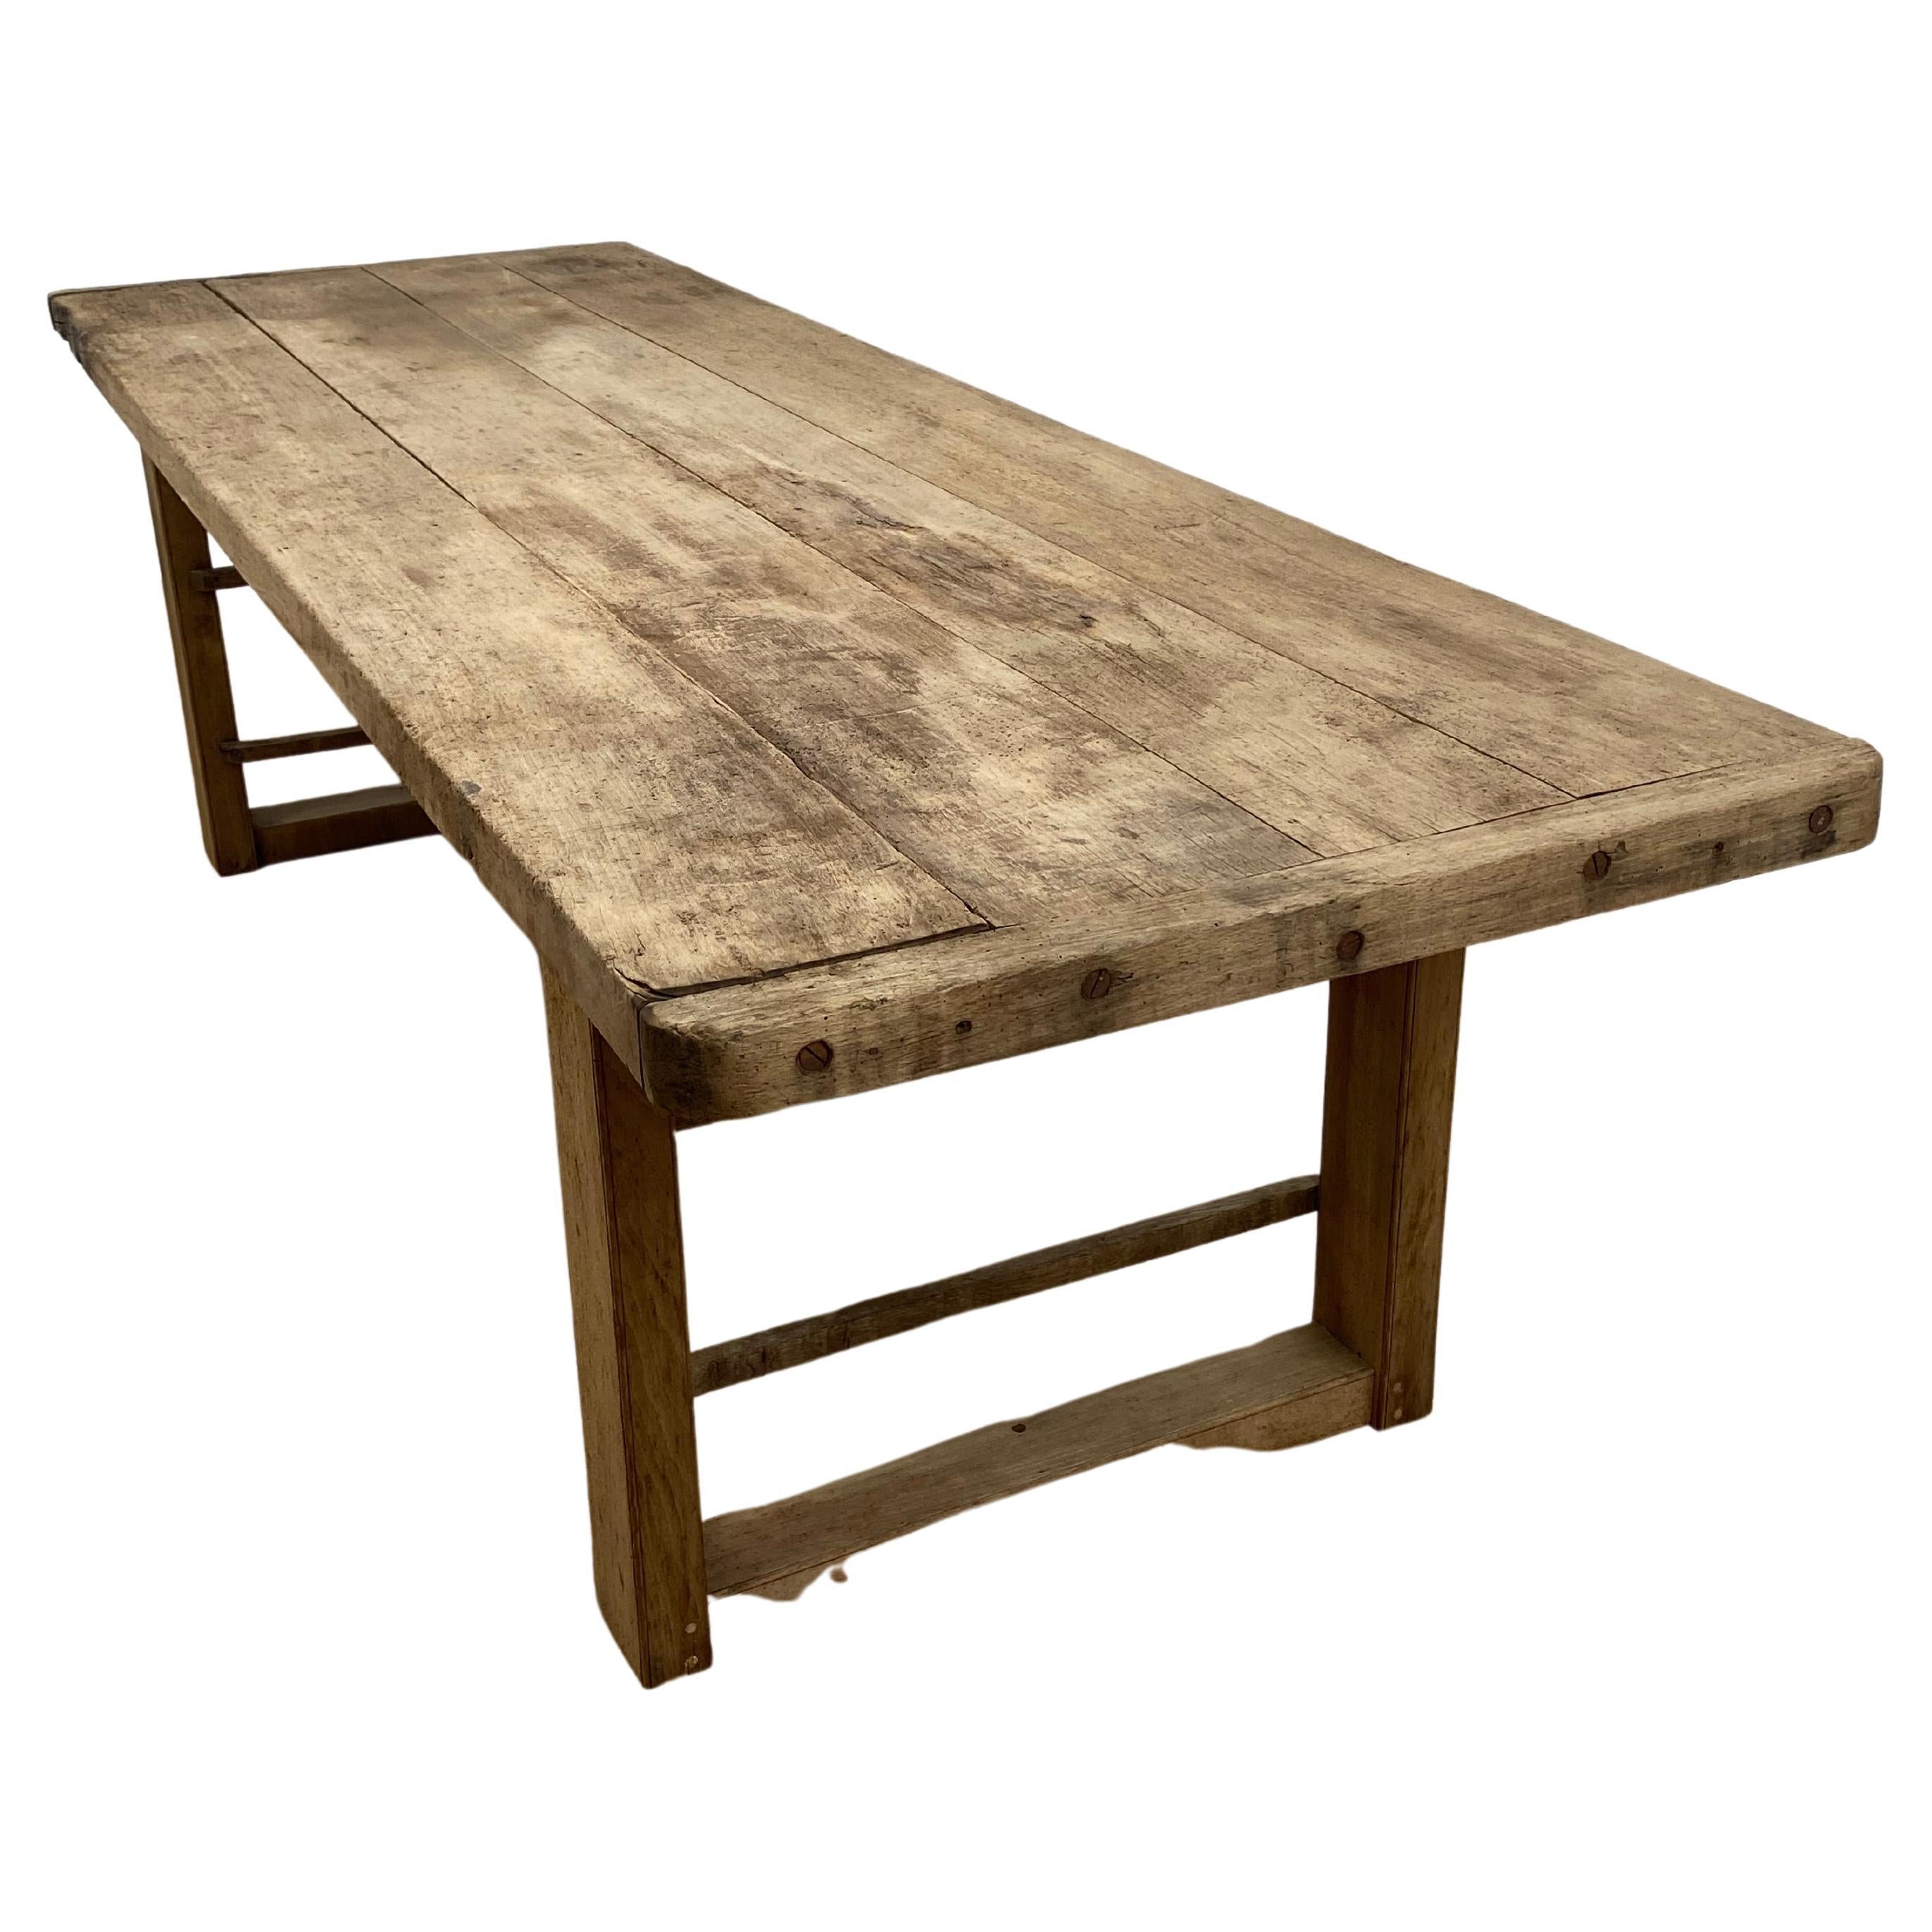 Vintage, Industrial Working Table in Bleached Wood